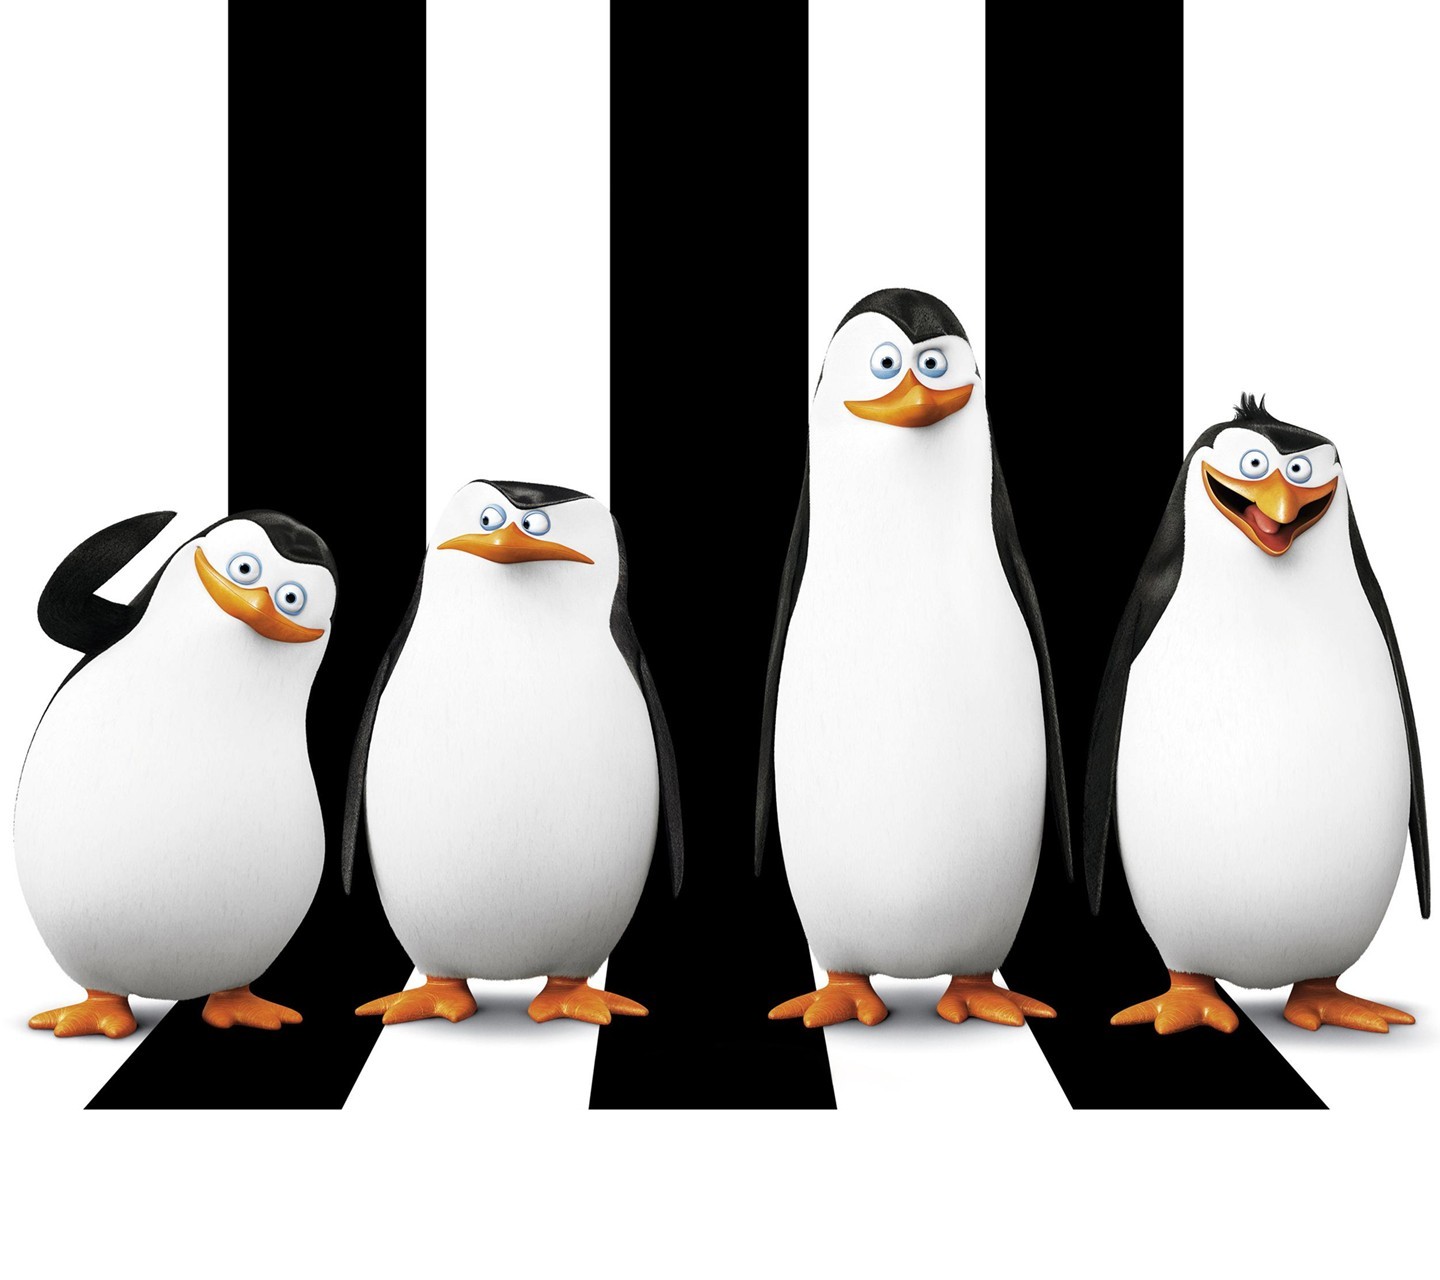 General 1440x1280 movies animated movies humor Penguins of Madagascar animals birds